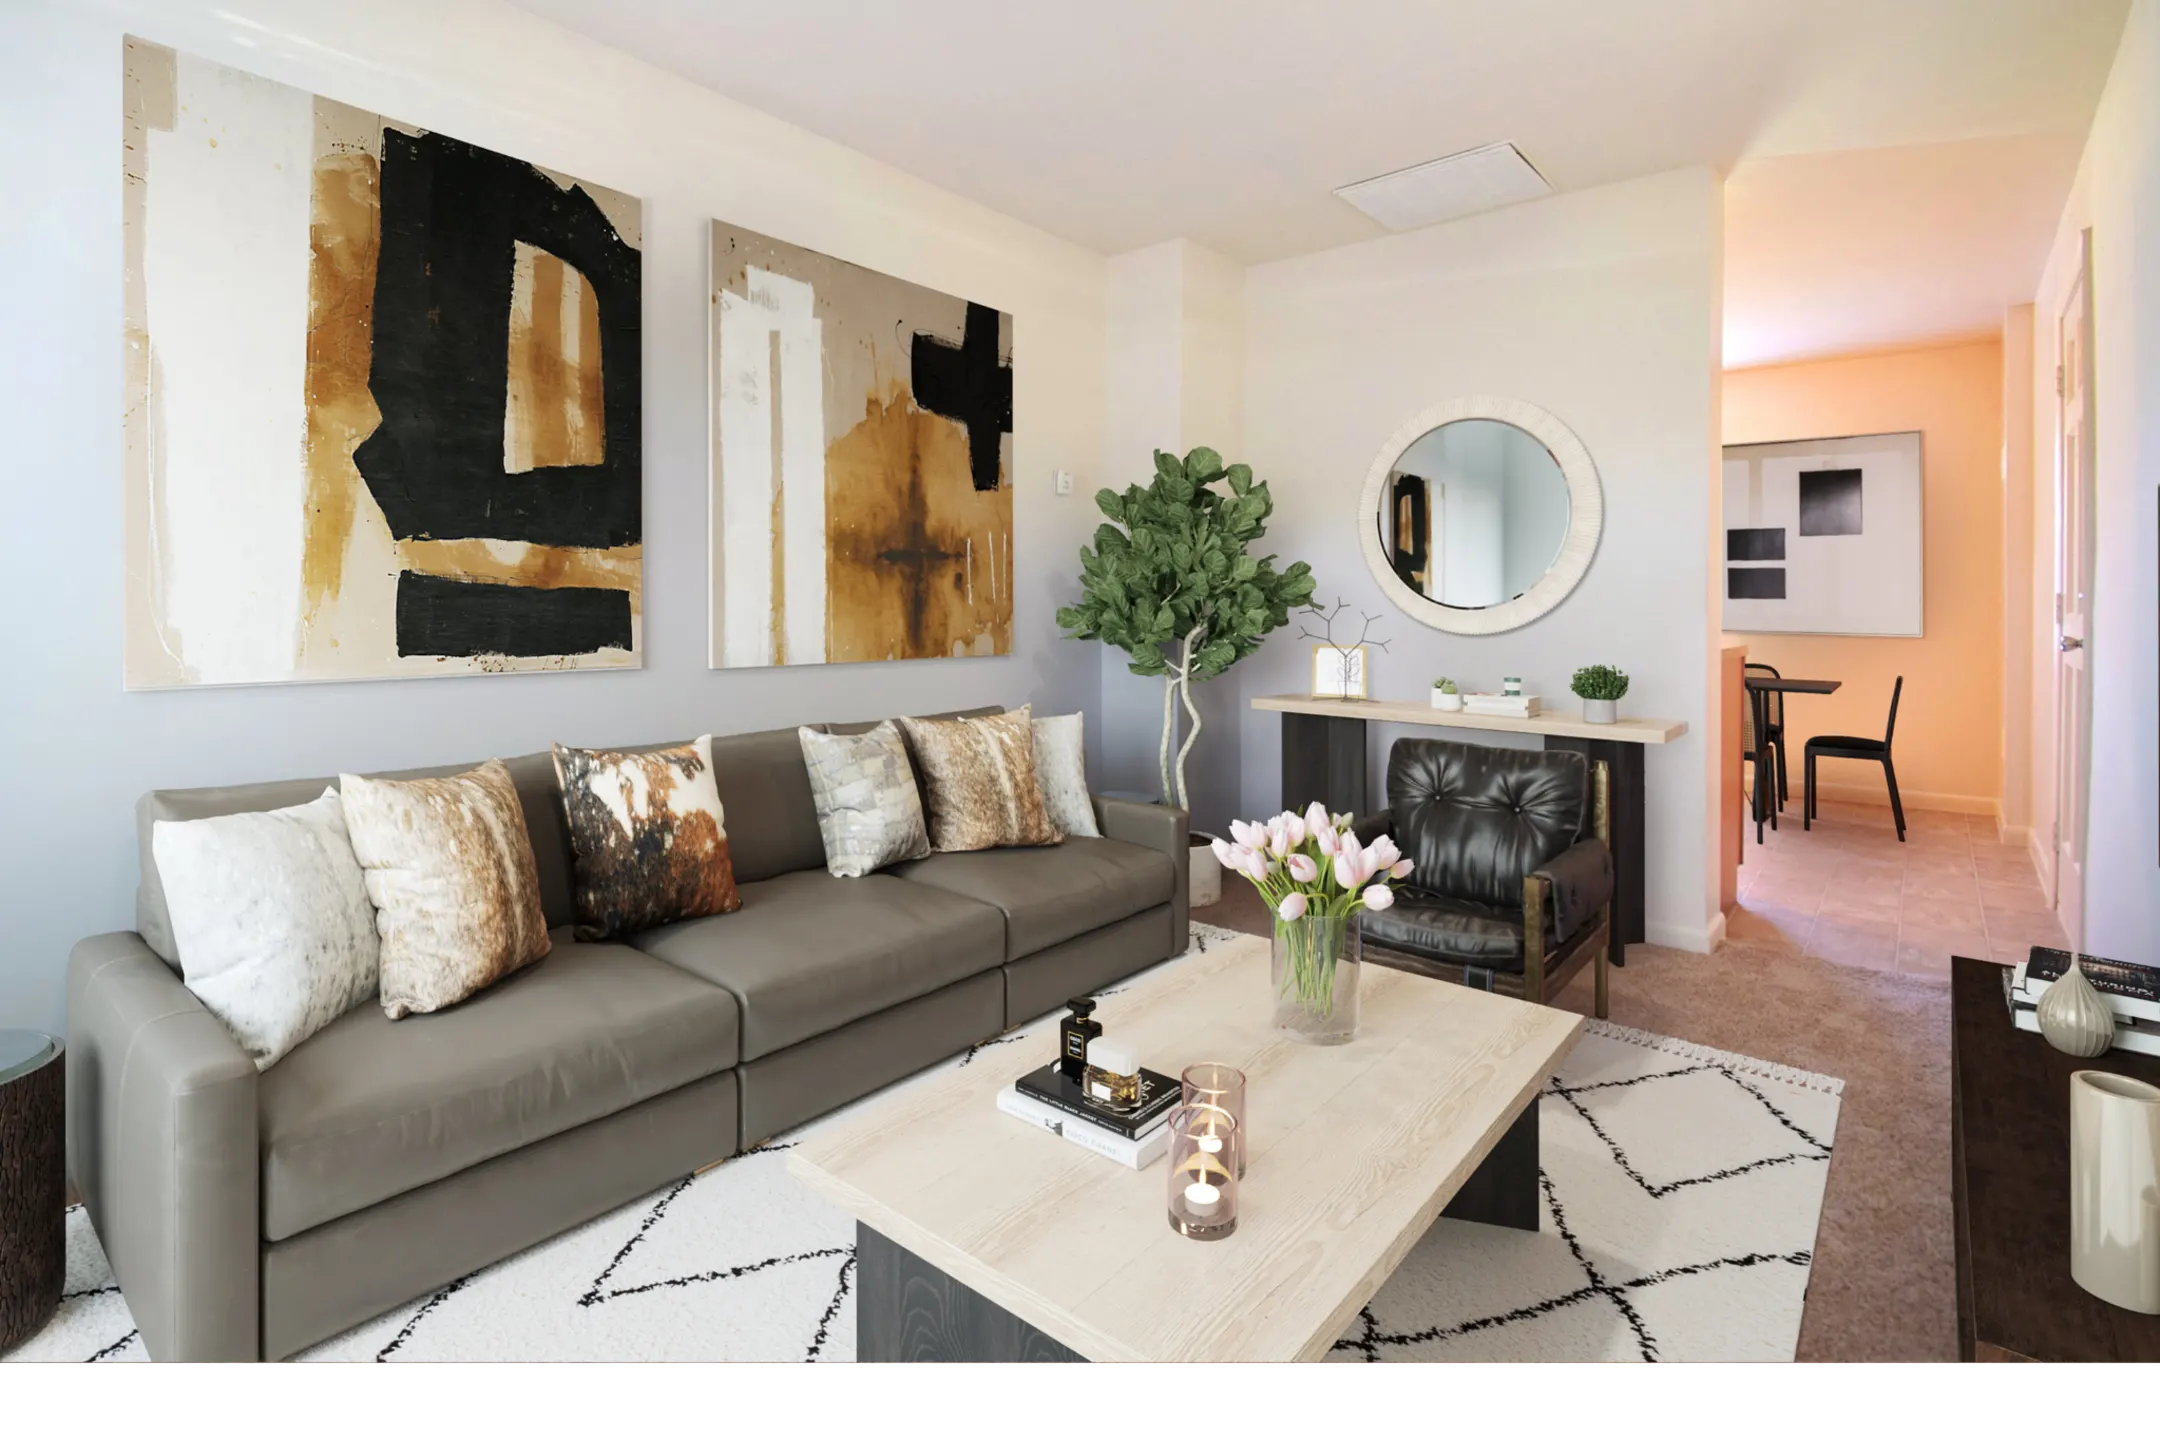 Living Room - Harford Commons - Edgewood, MD